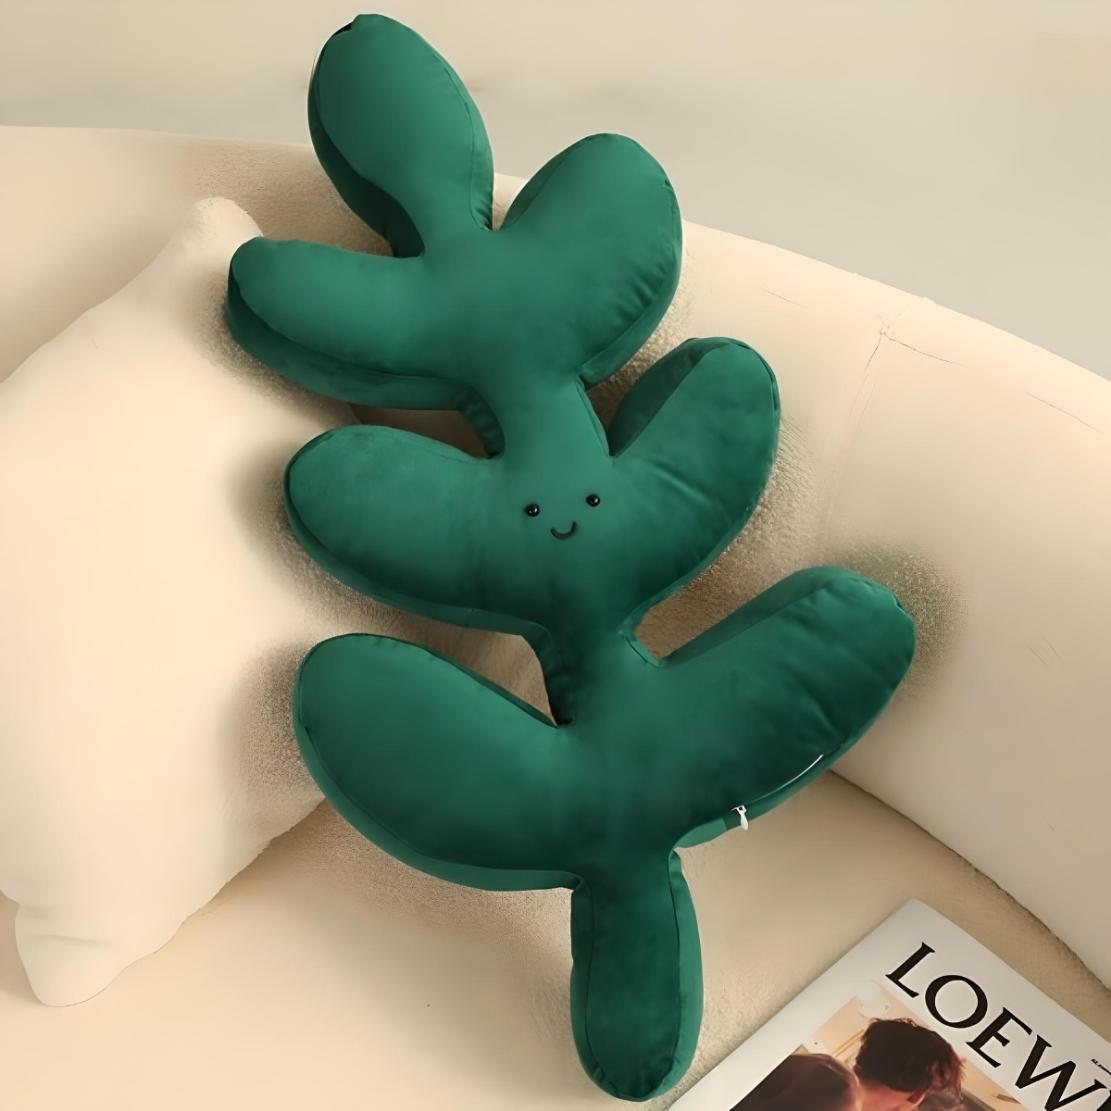 Green plant decorative throw pillow